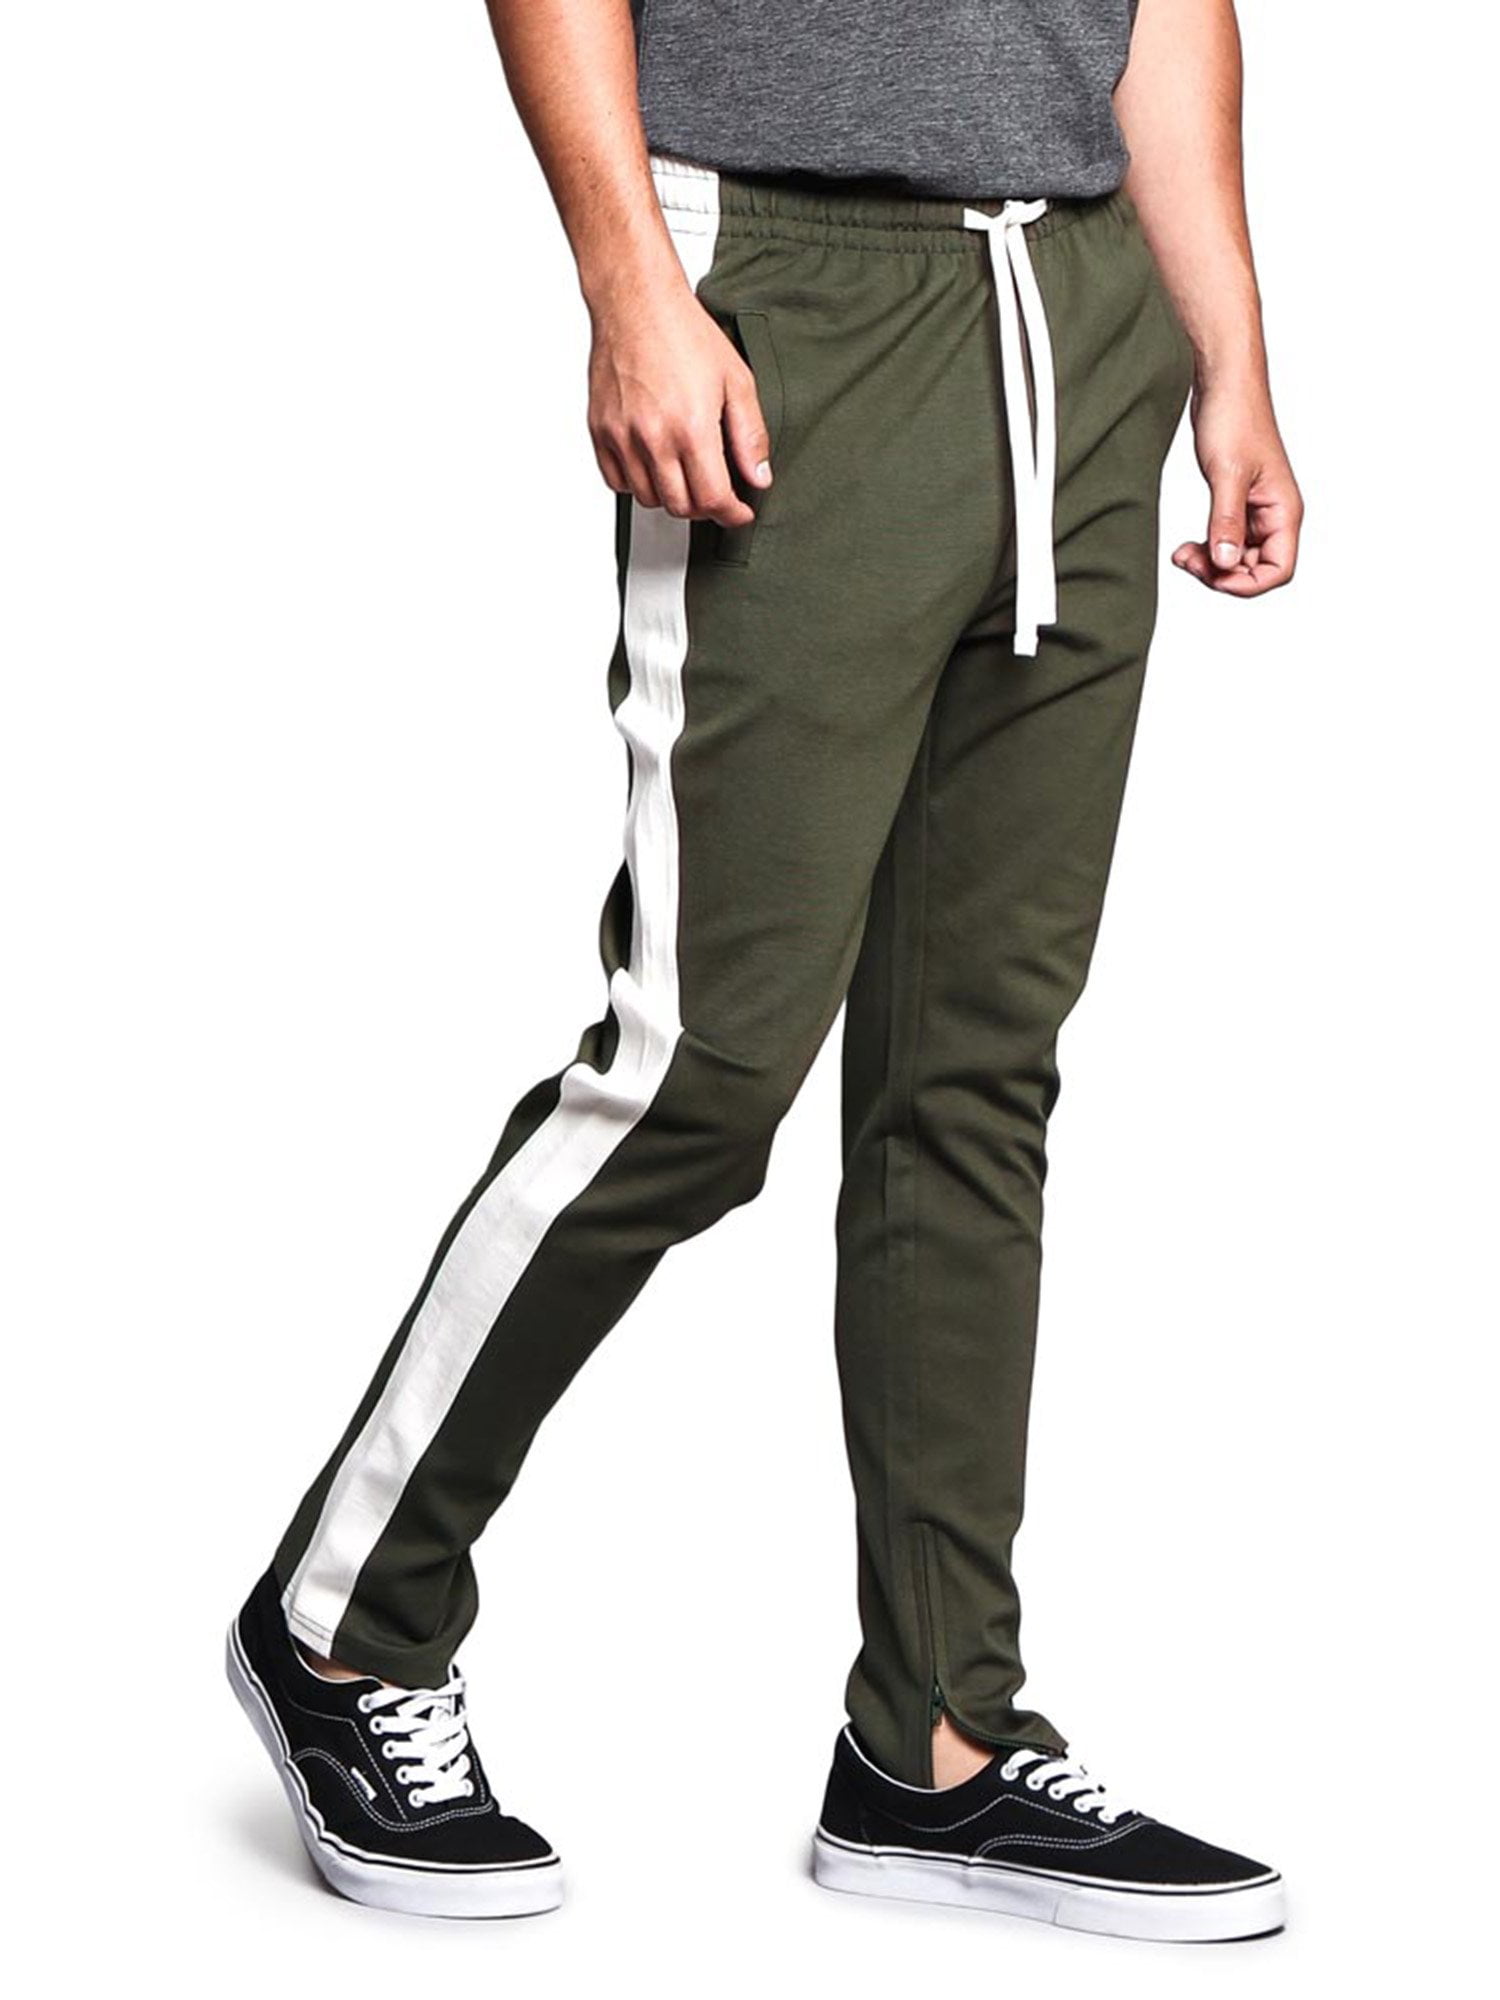 Xersion Athletic Pants Gray side stripe Men's Size Medium activewear track  pant